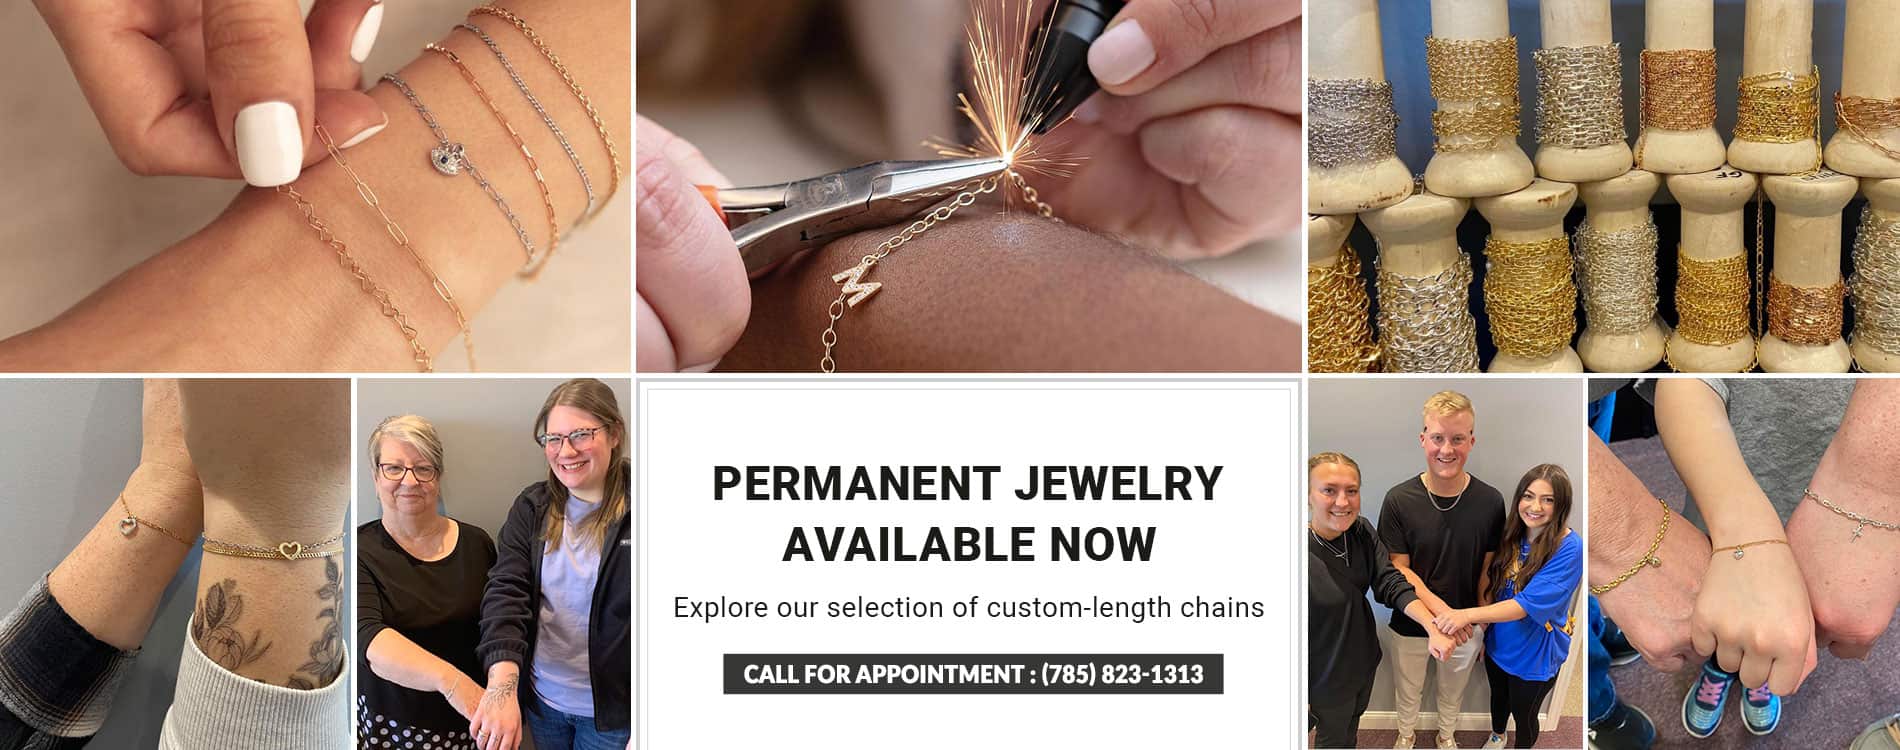 Permanent Jewelry at Showcase Jewelers